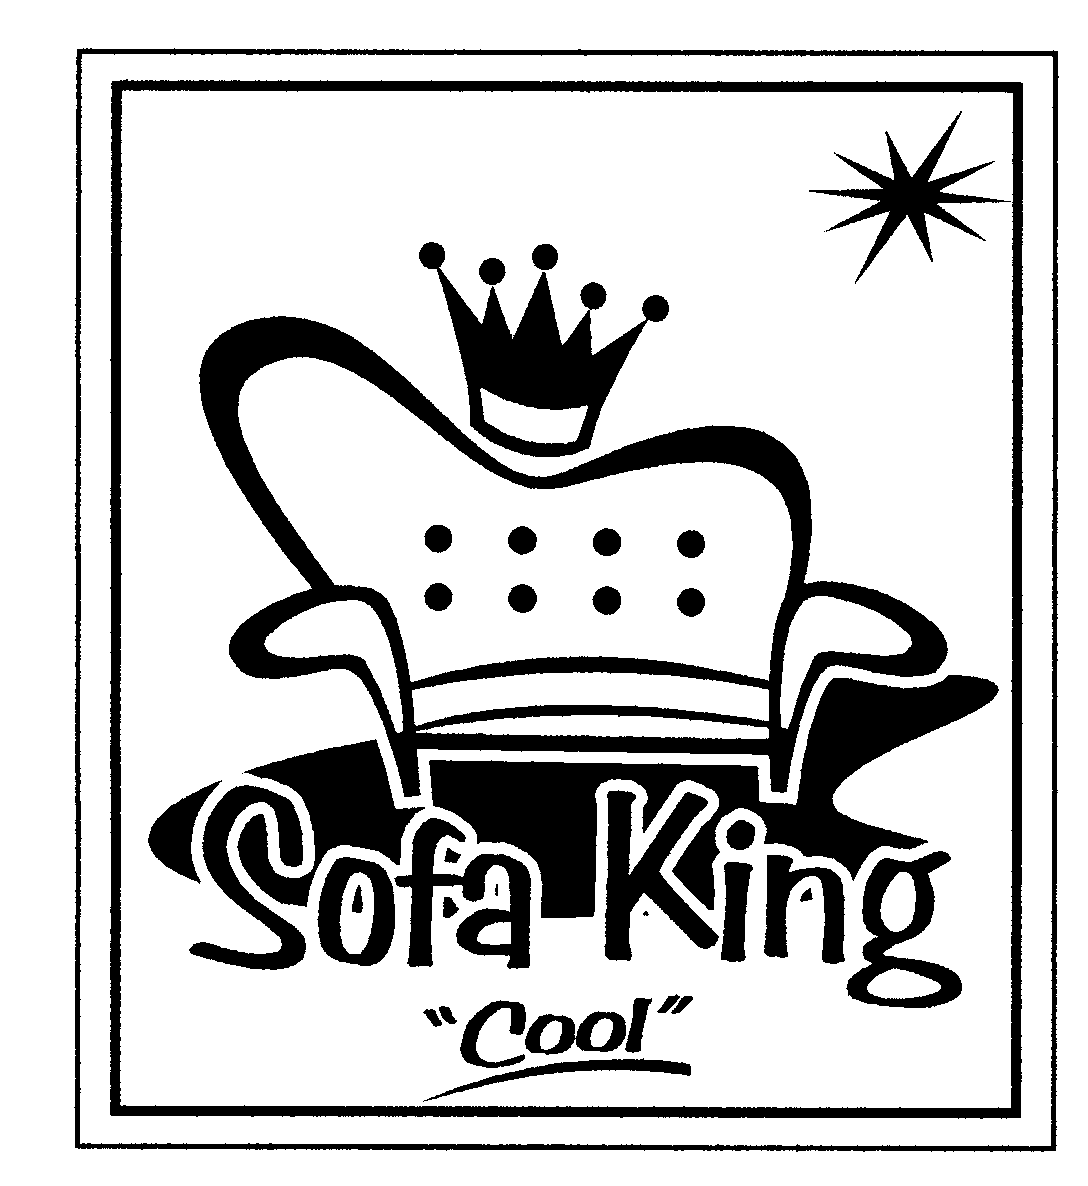  SOFA KING "COOL"